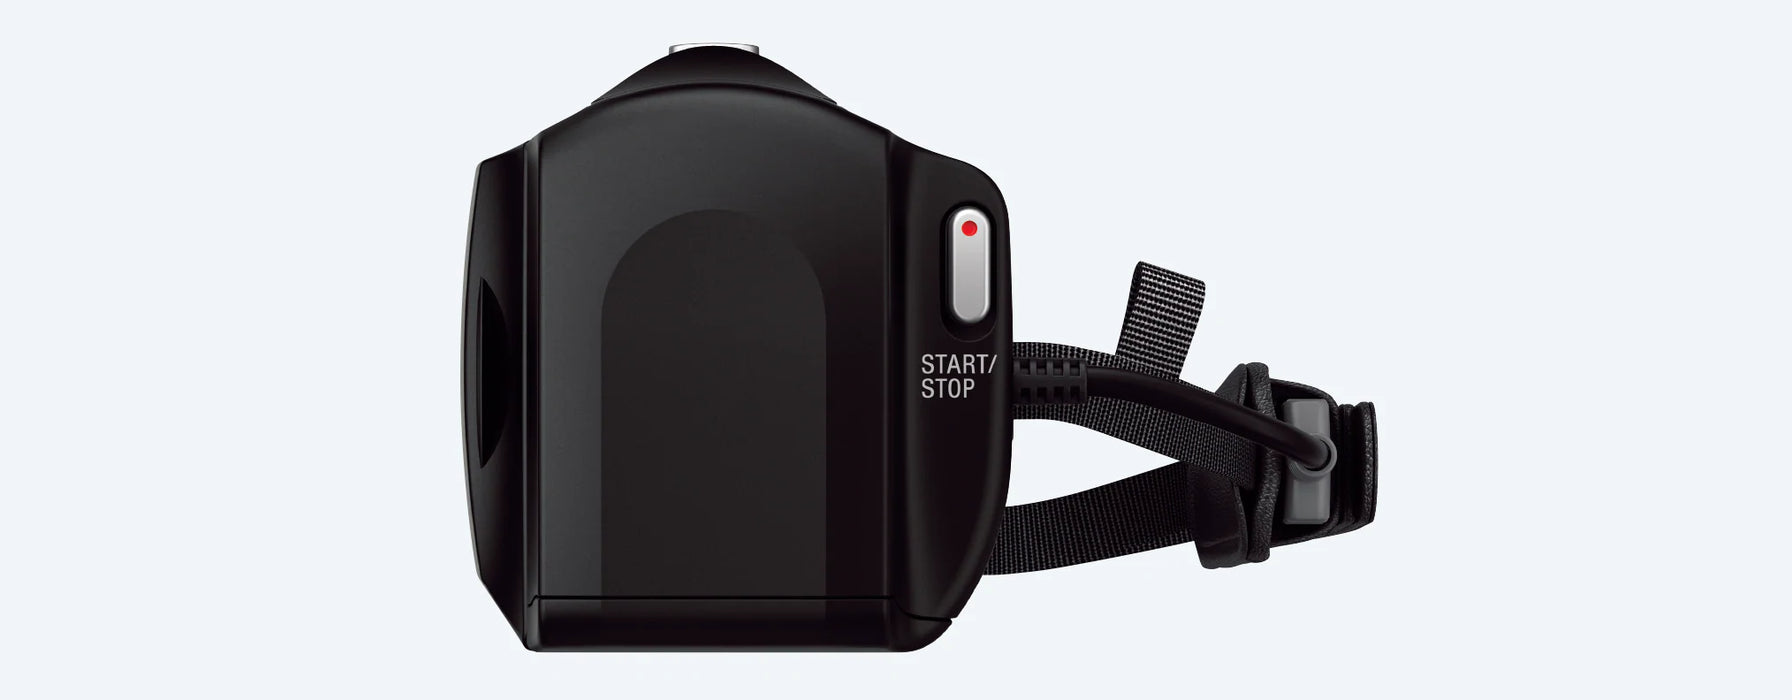 Sony HDR-CX405 Handycam Camcorder